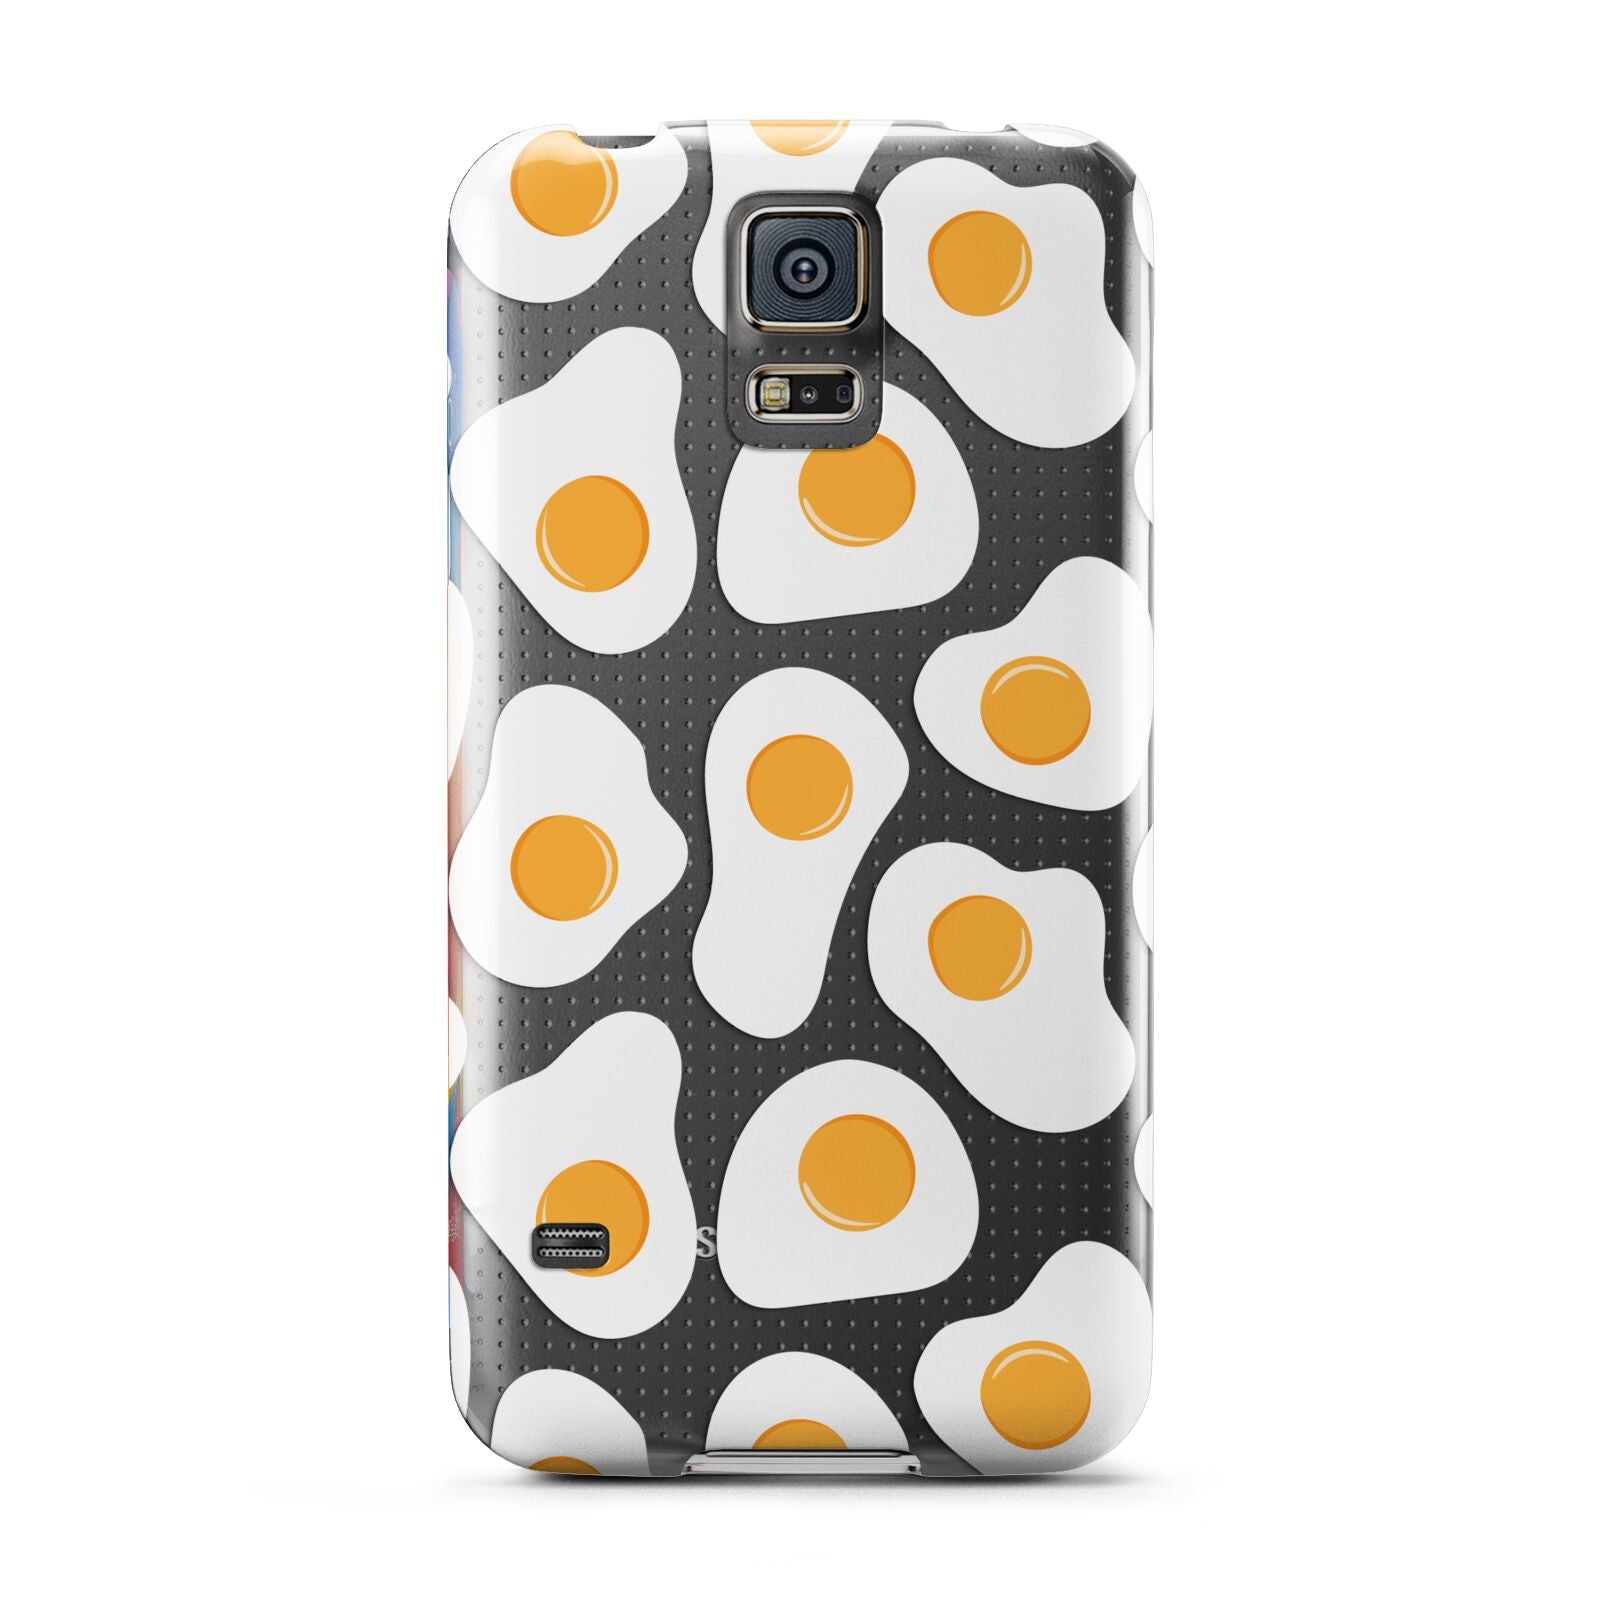 Fried Egg Samsung Galaxy S5 Case